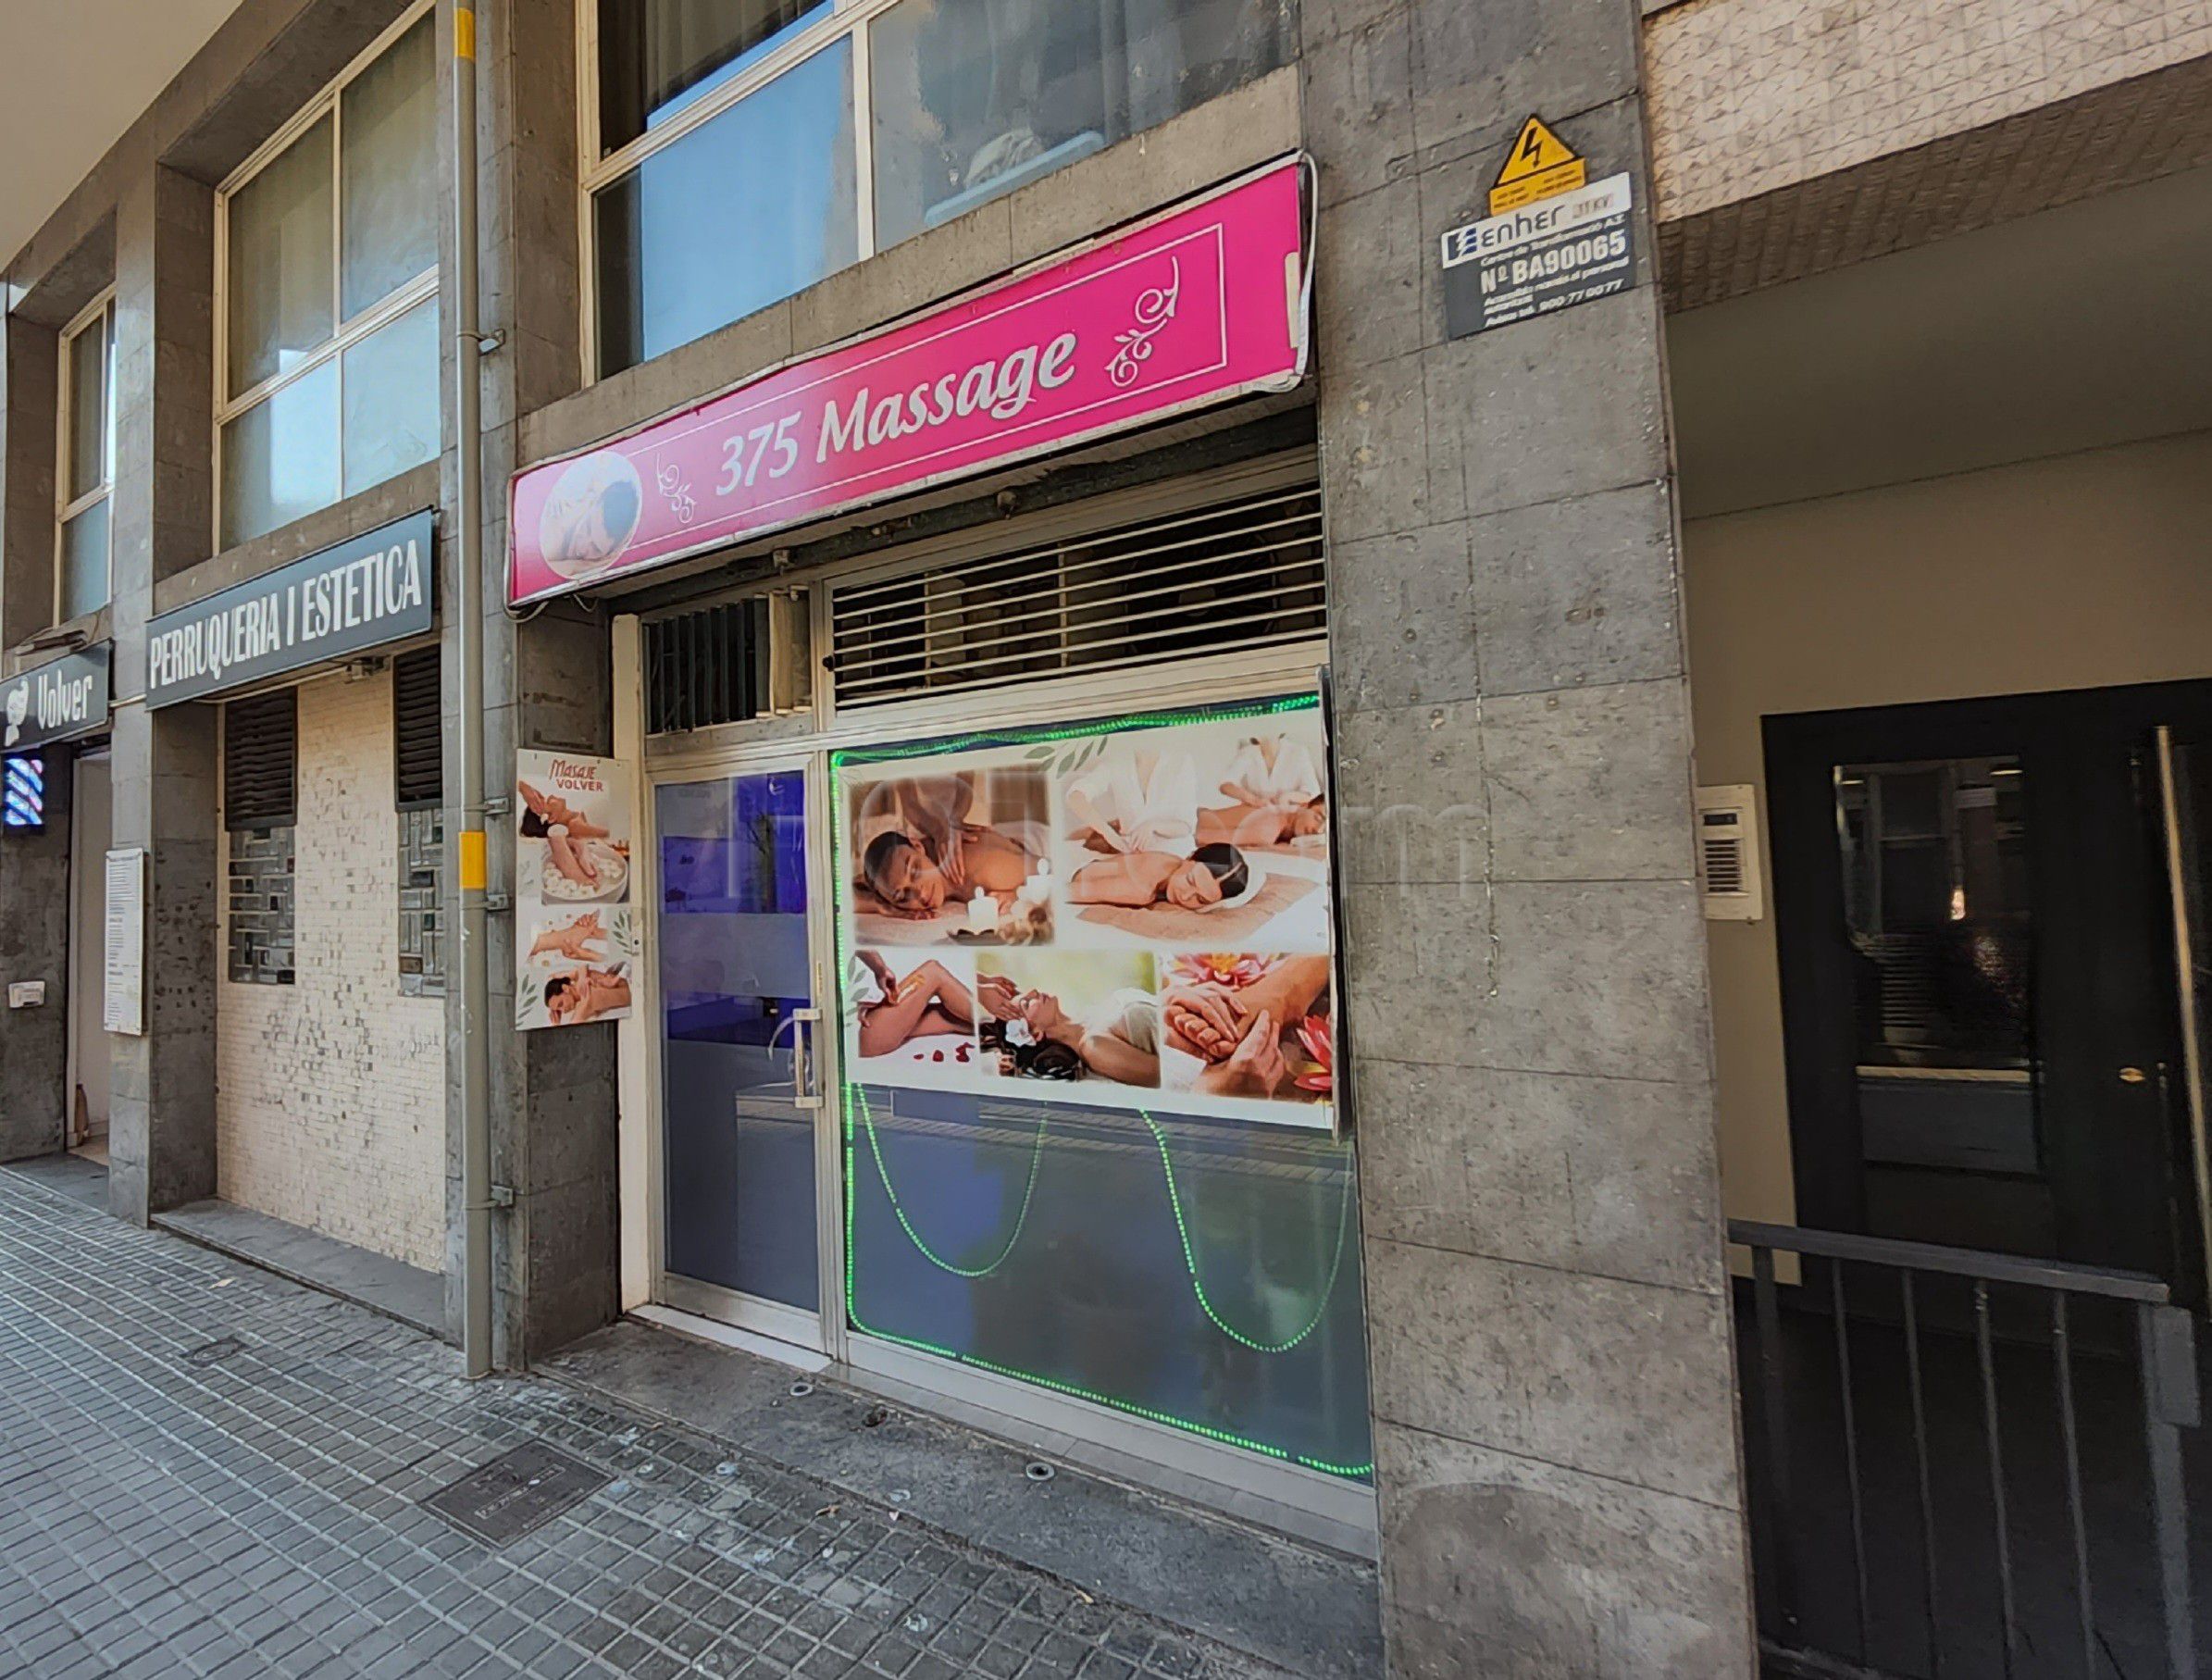 Barcelona, Spain 375 Massage